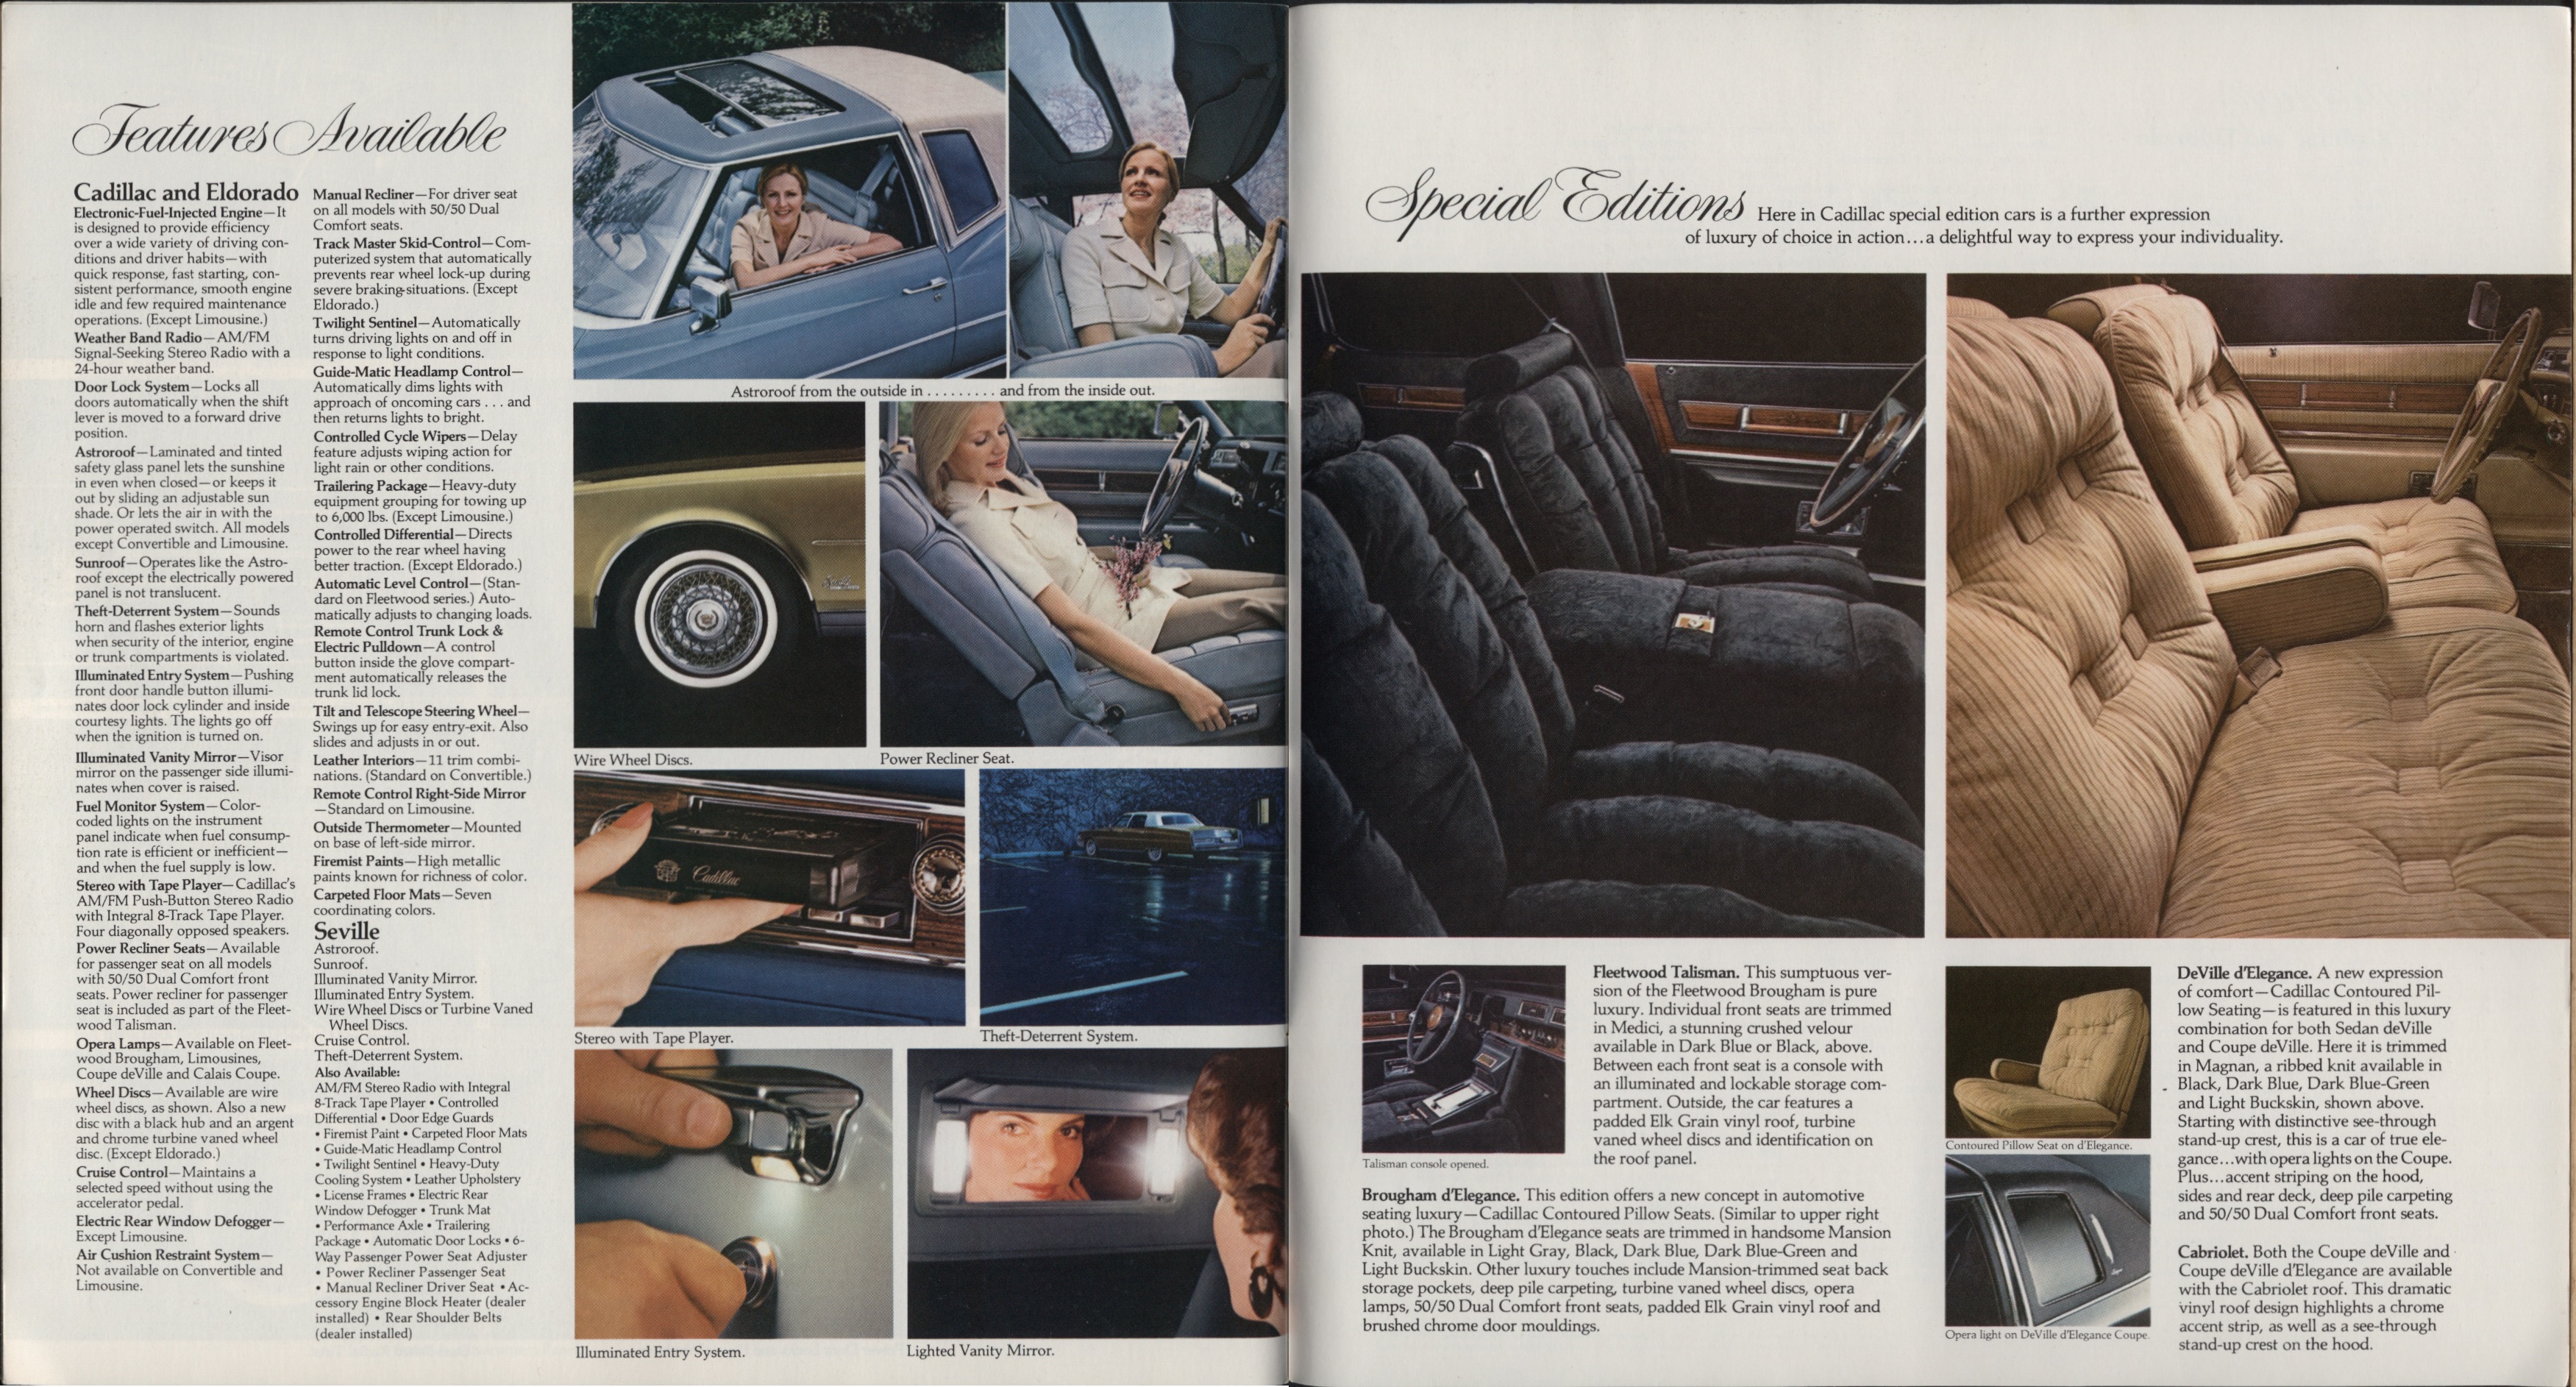 1976 Cadillac Full Line Brochure 24-25